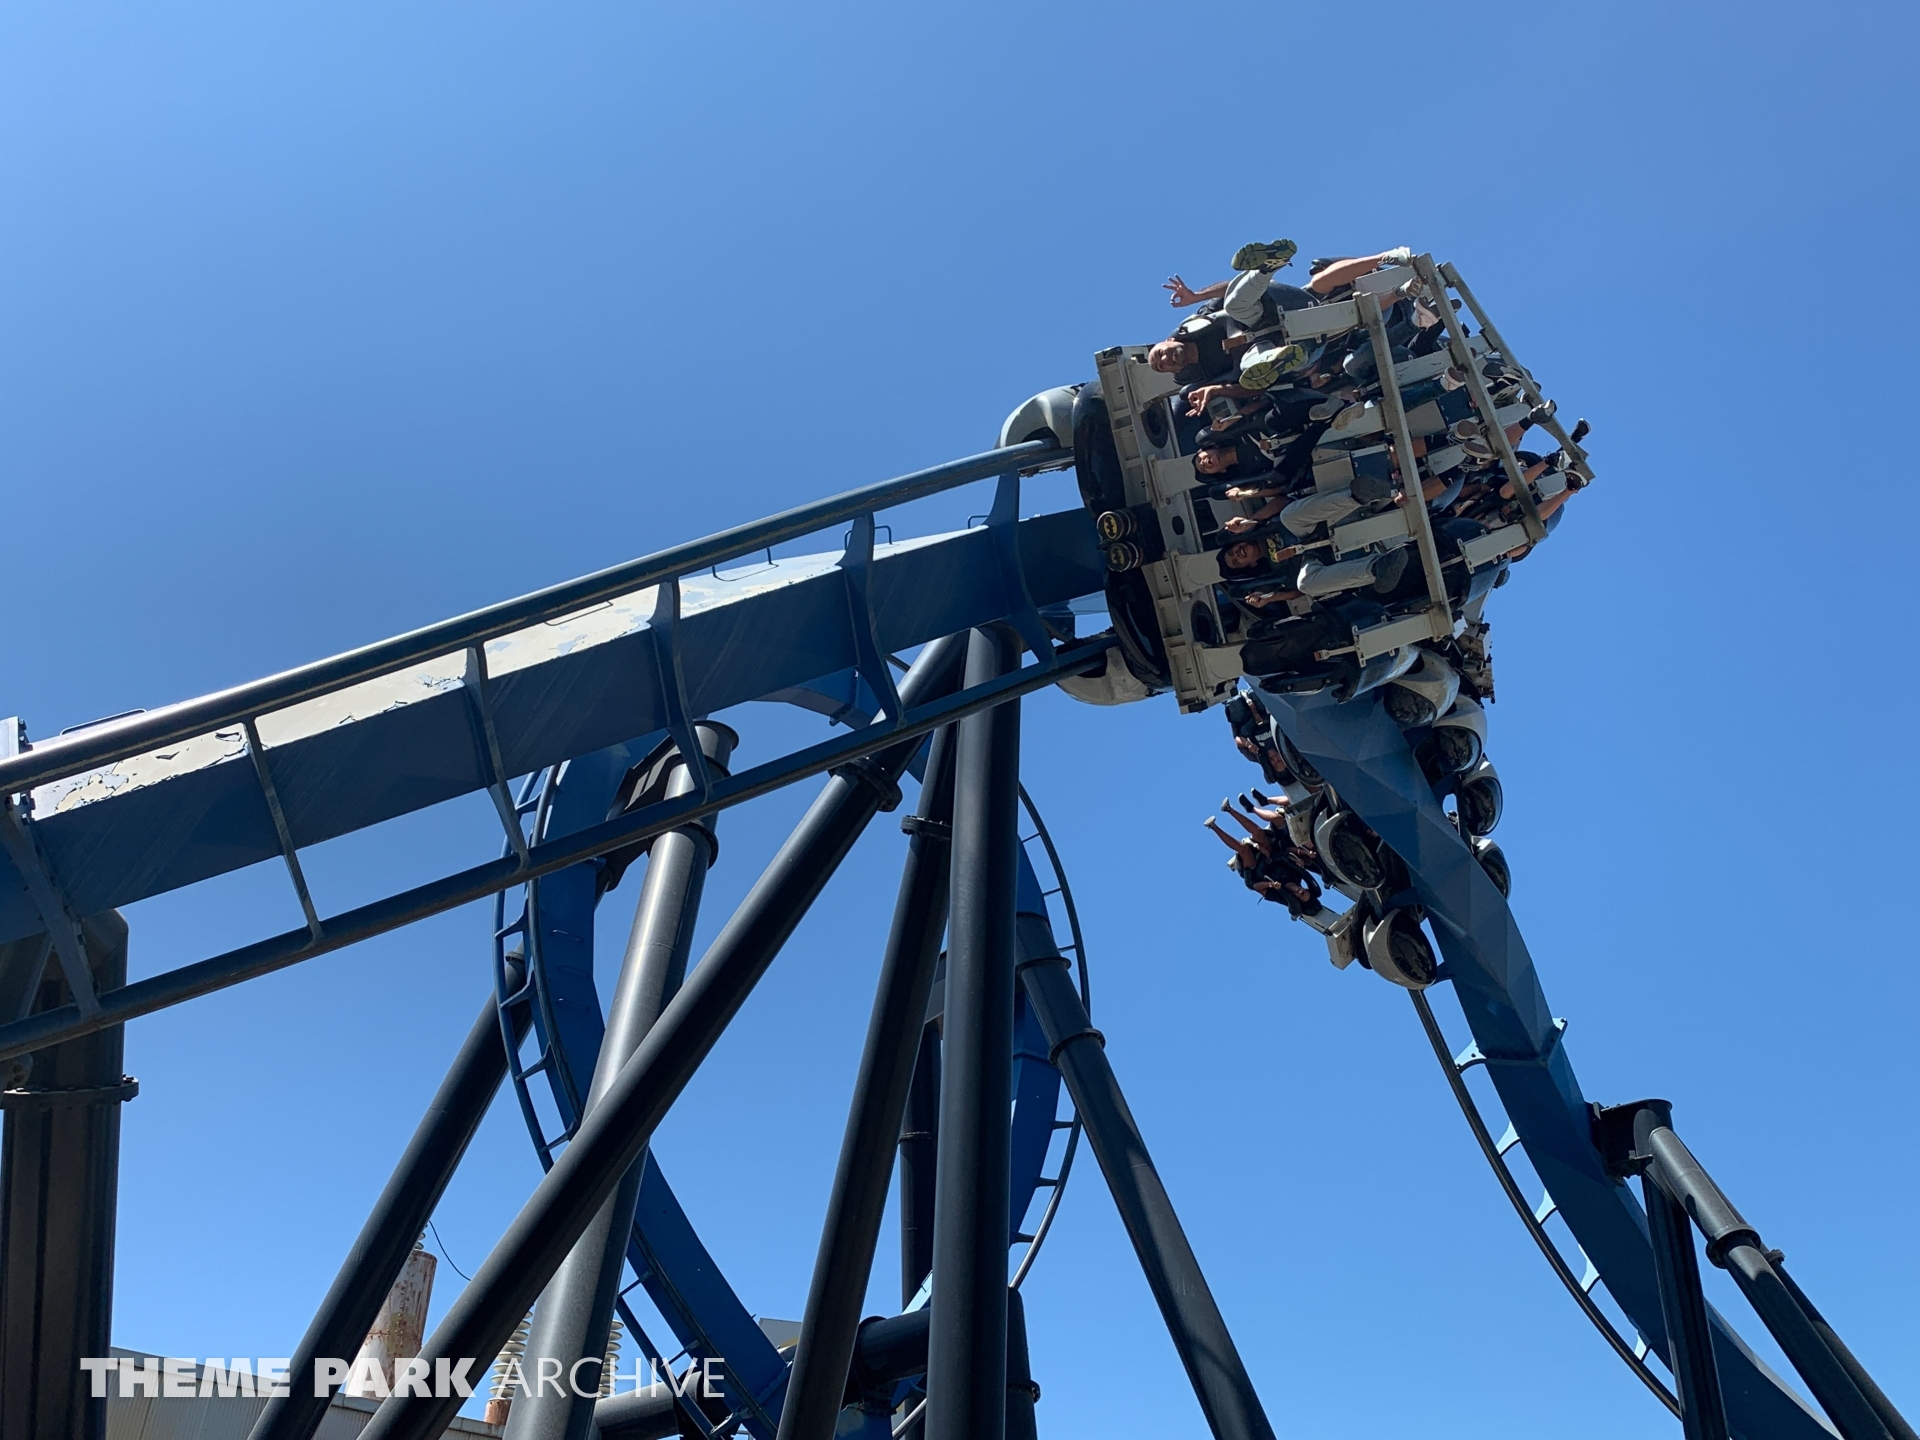 Batman The Ride at Six Flags Magic Mountain | Theme Park Archive